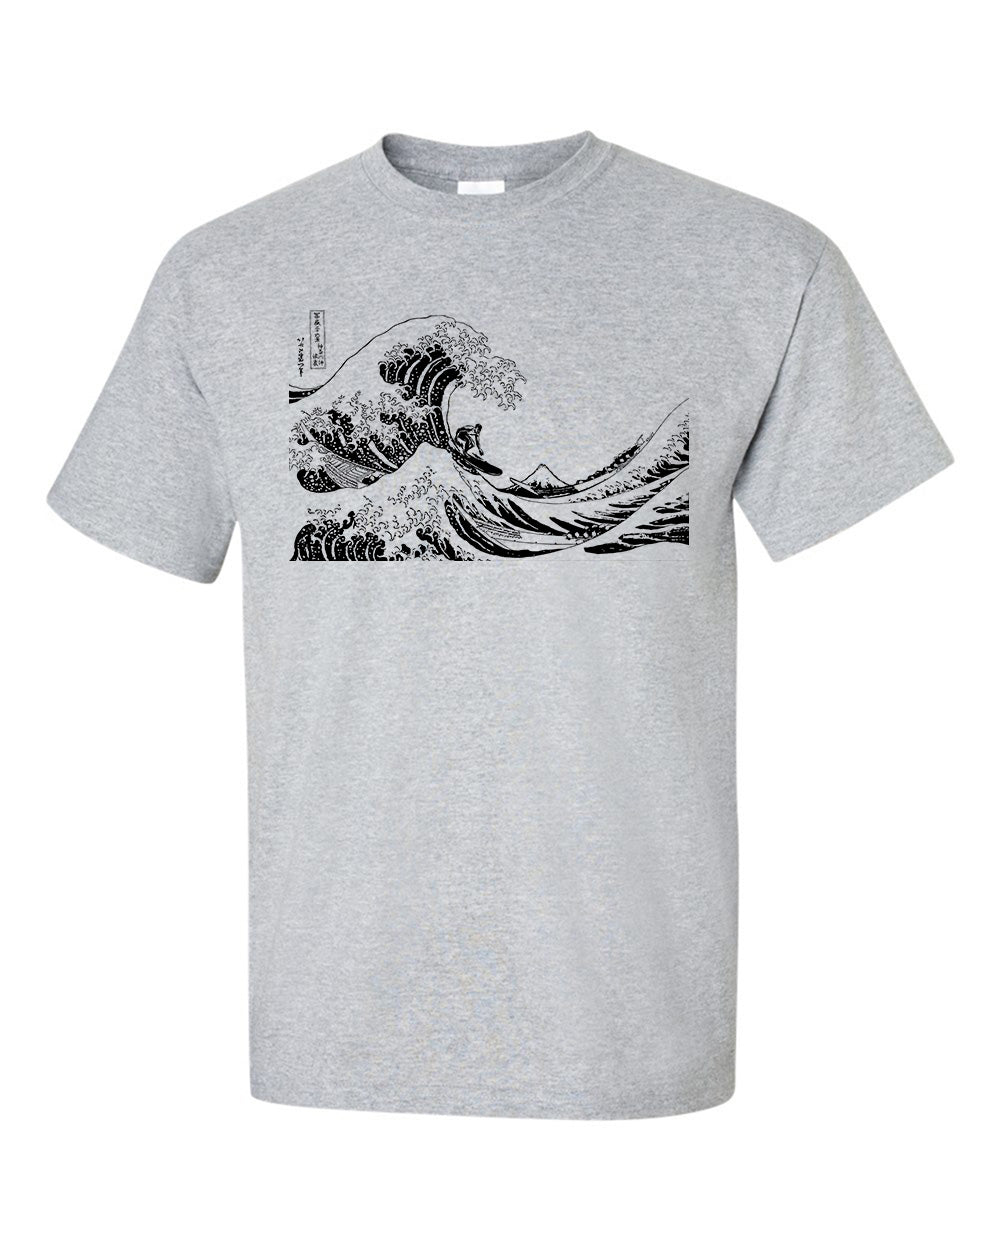 Surfing The Great Wave off Kanagawa Mono Hokusai Surfer T-Shirt